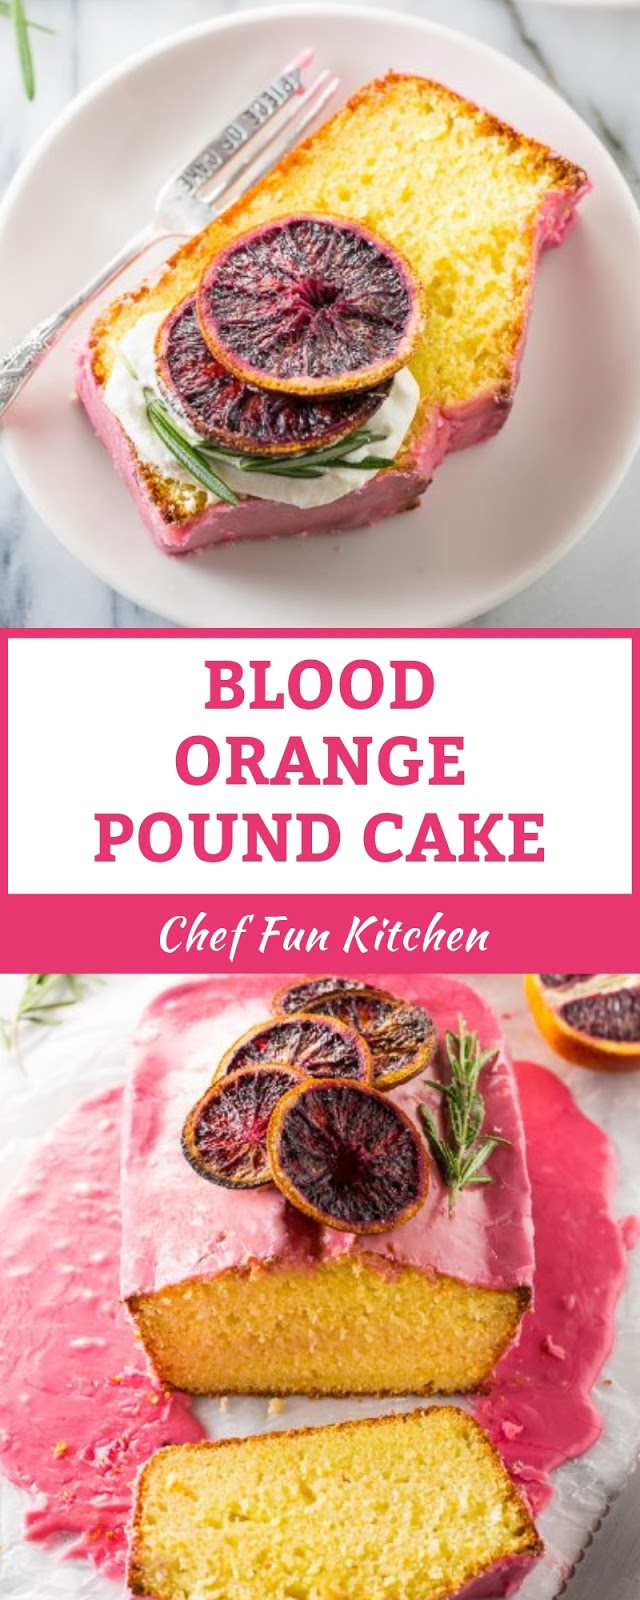 BLOOD ORANGE POUND CAKE